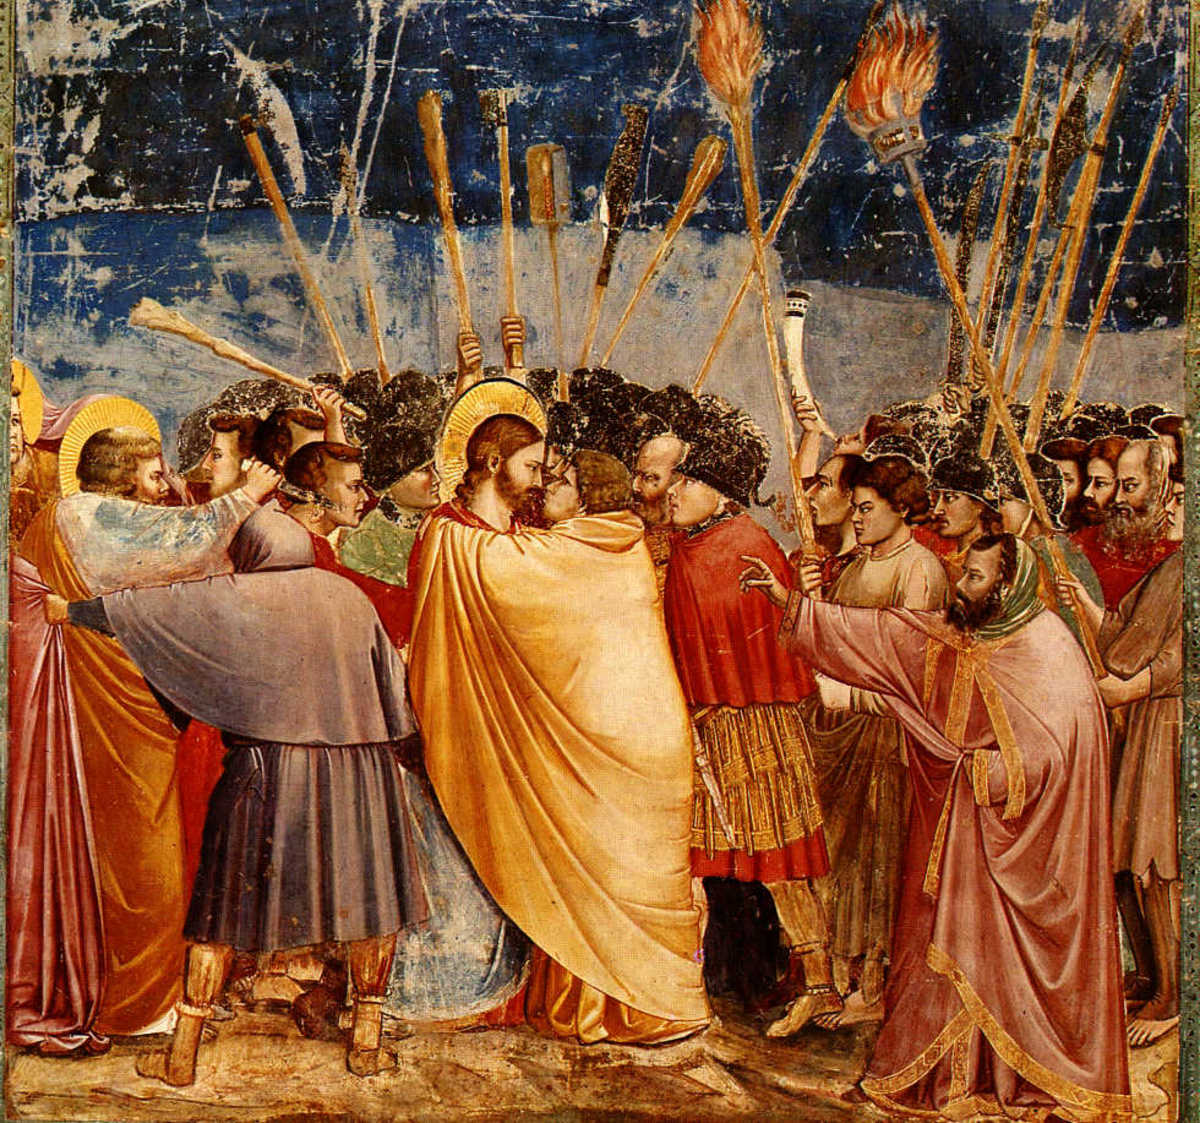 Giotto's "Kiss of Judas"